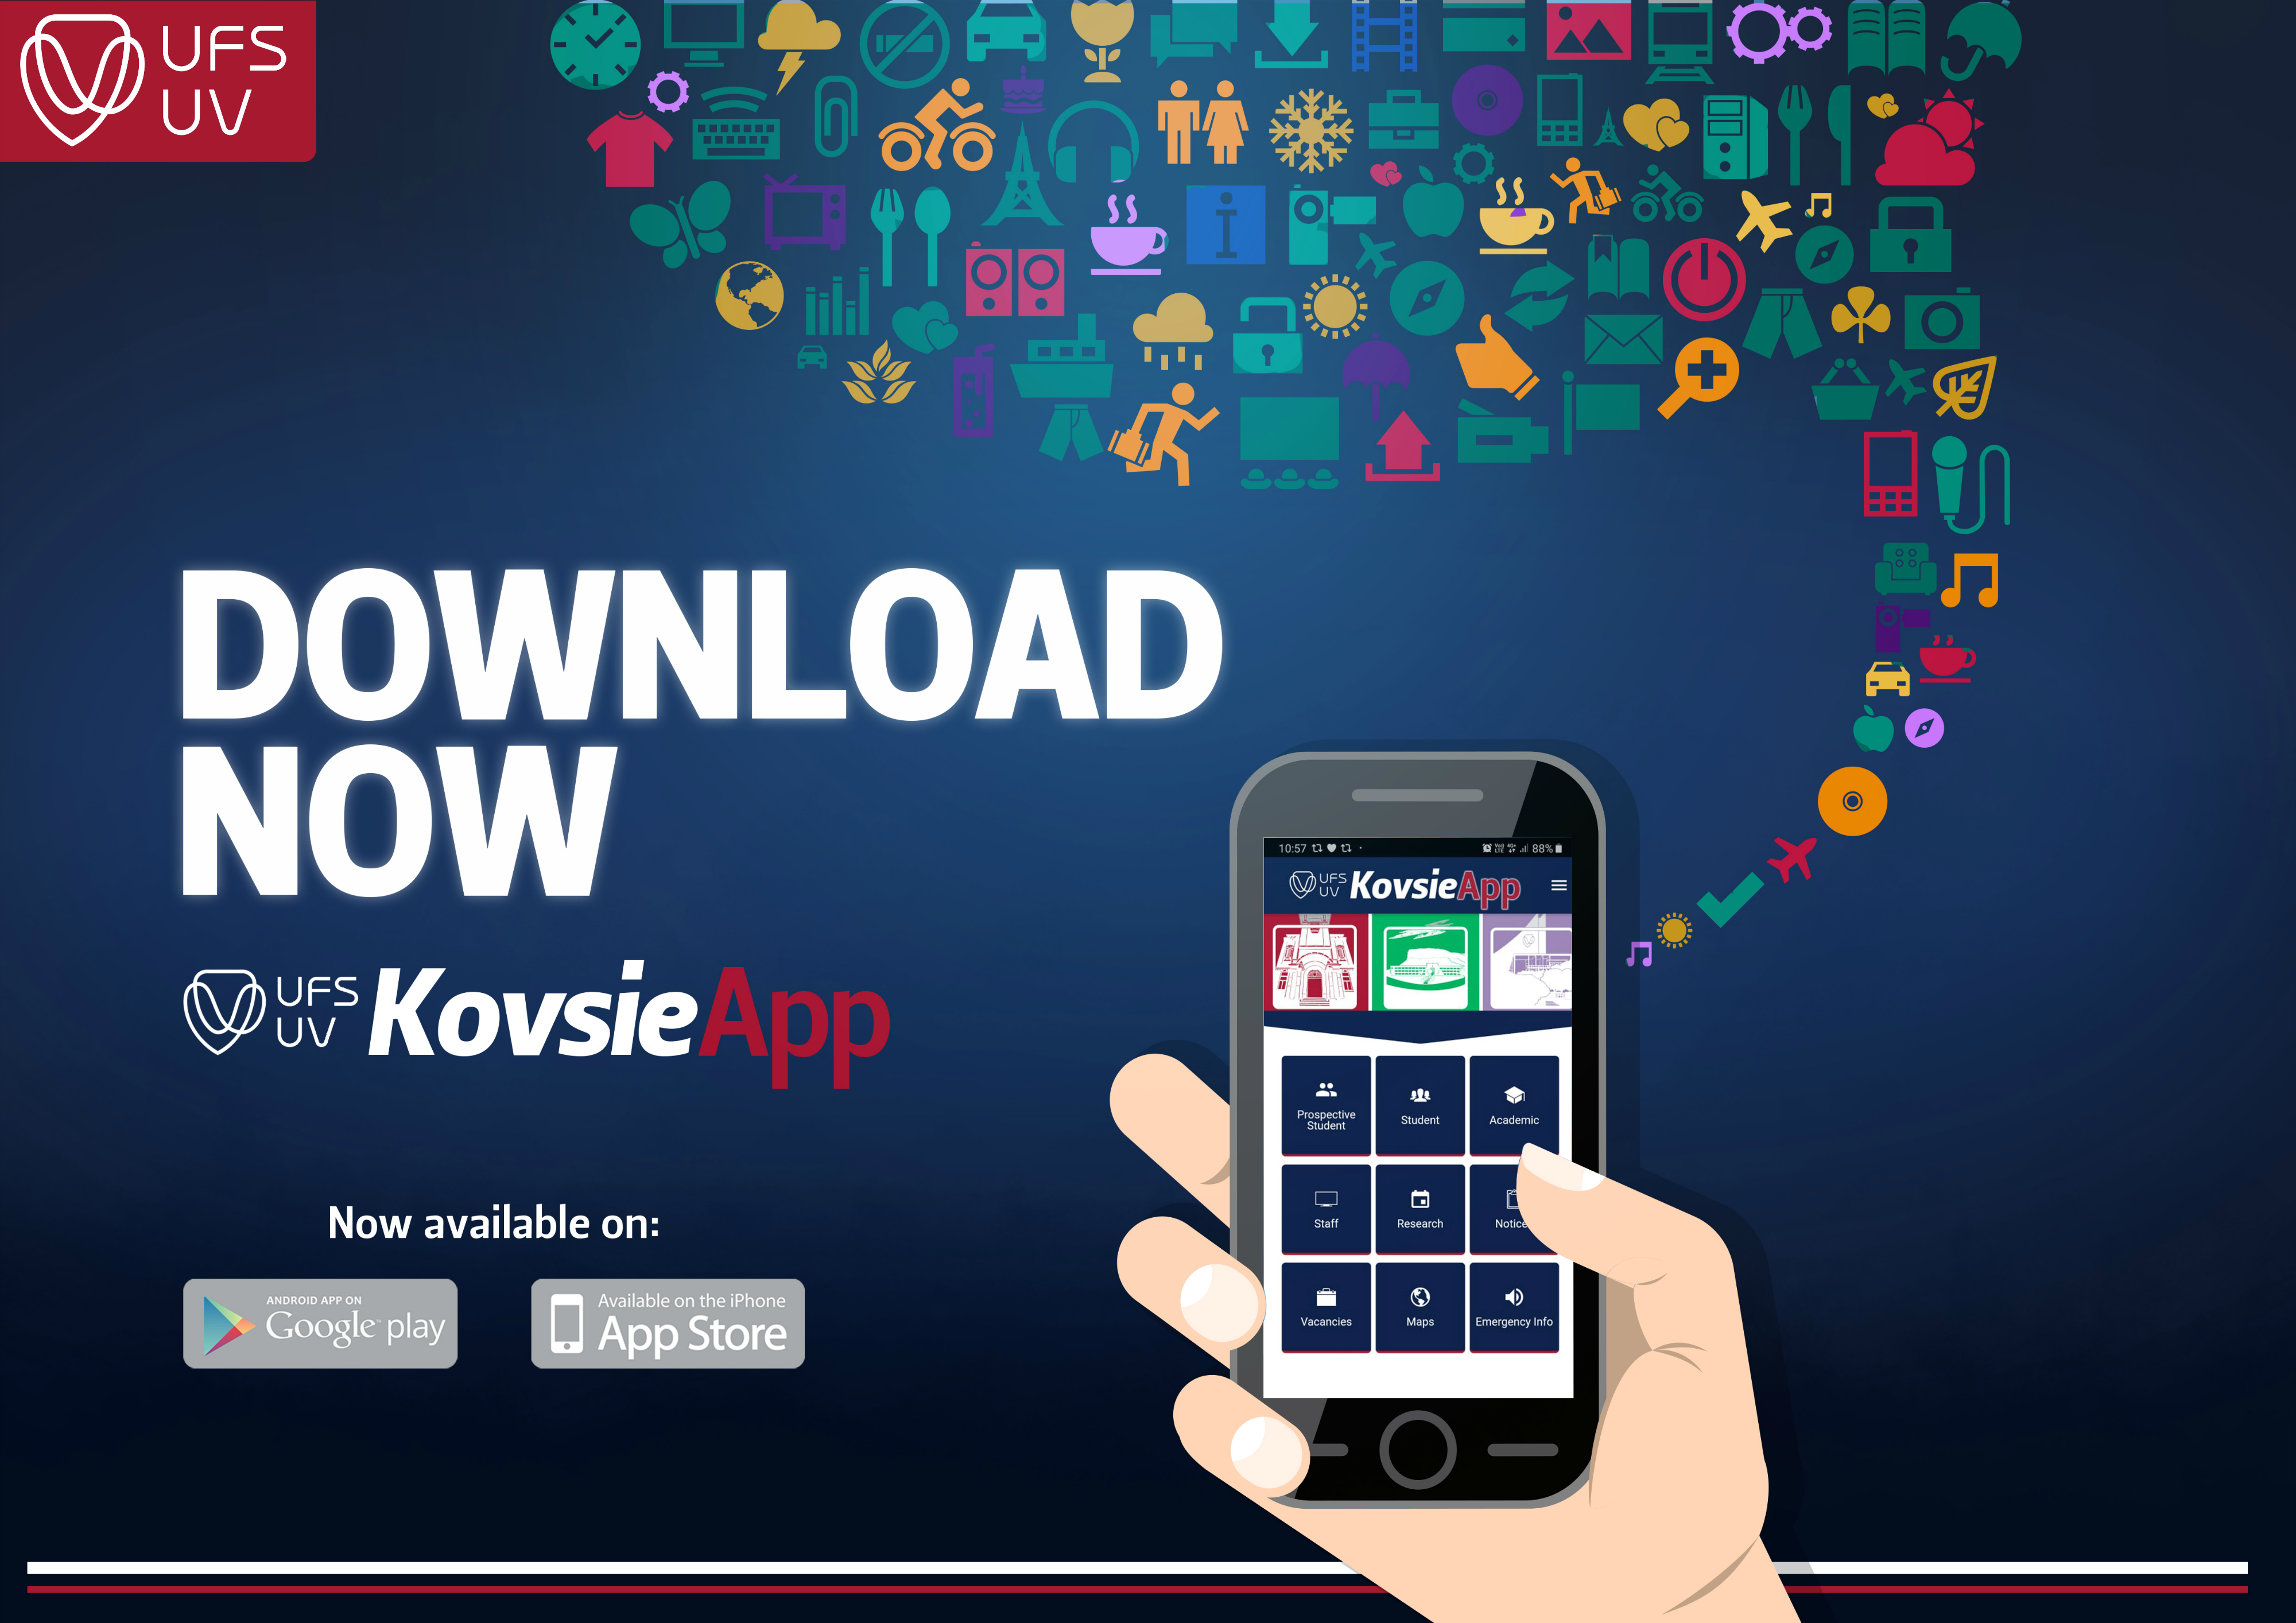 Download the KovsieApp